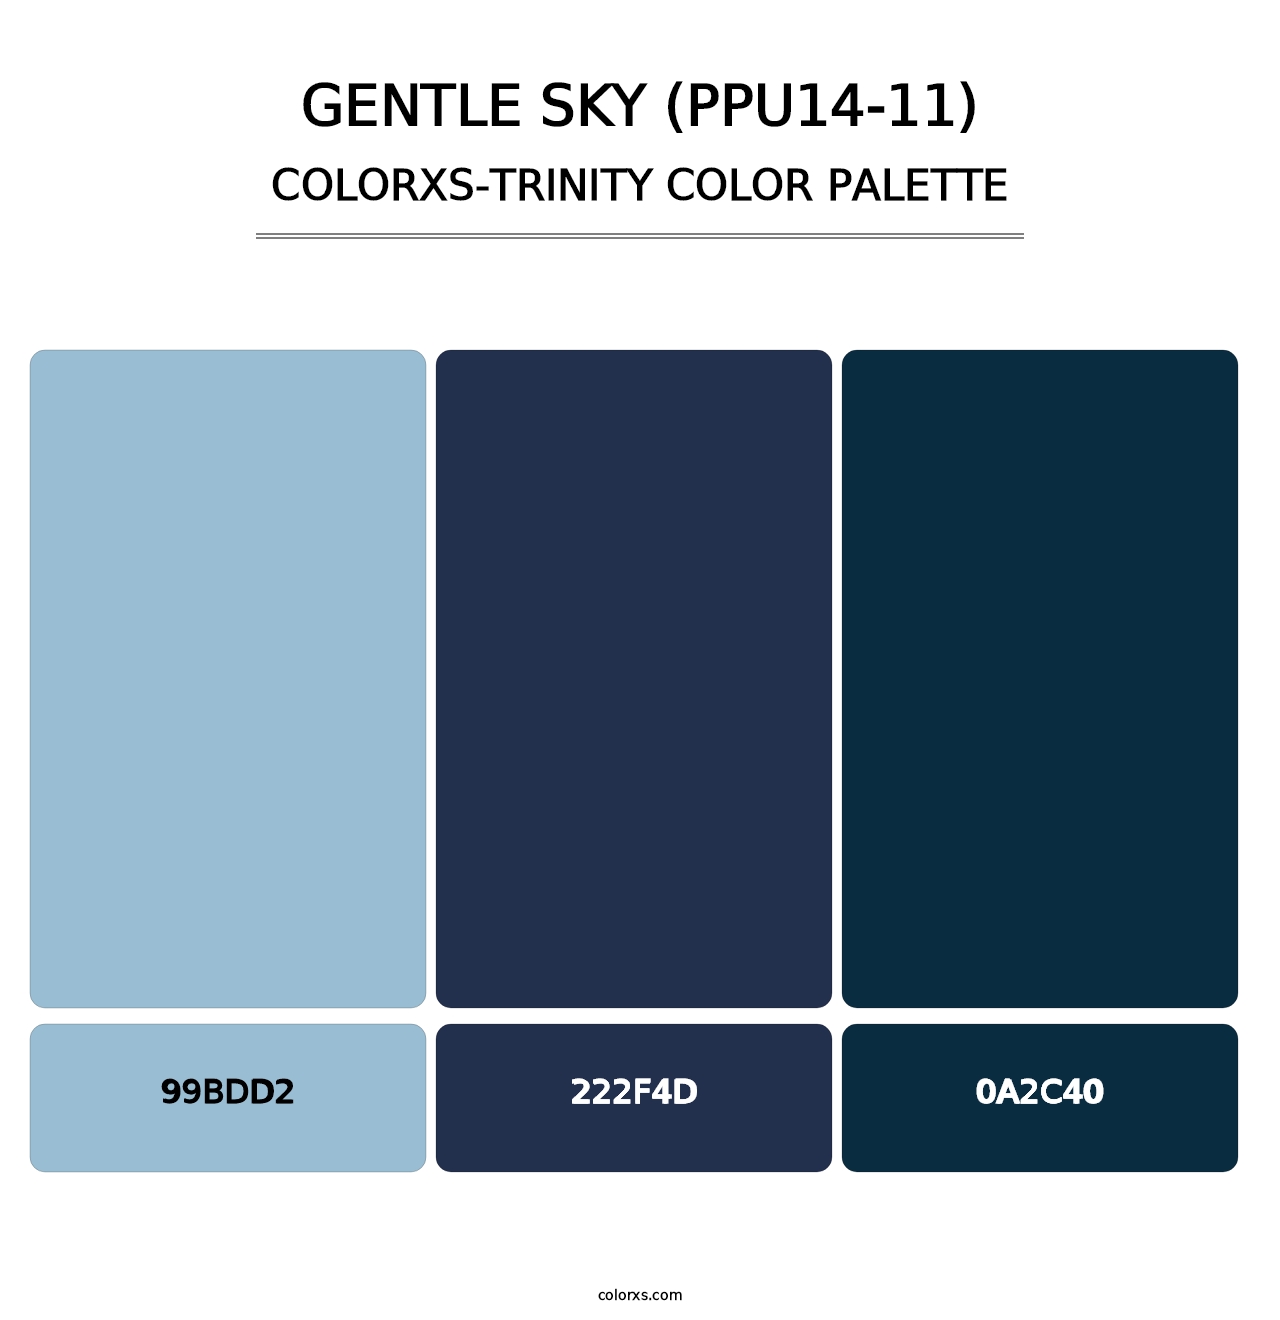 Gentle Sky (PPU14-11) - Colorxs Trinity Palette